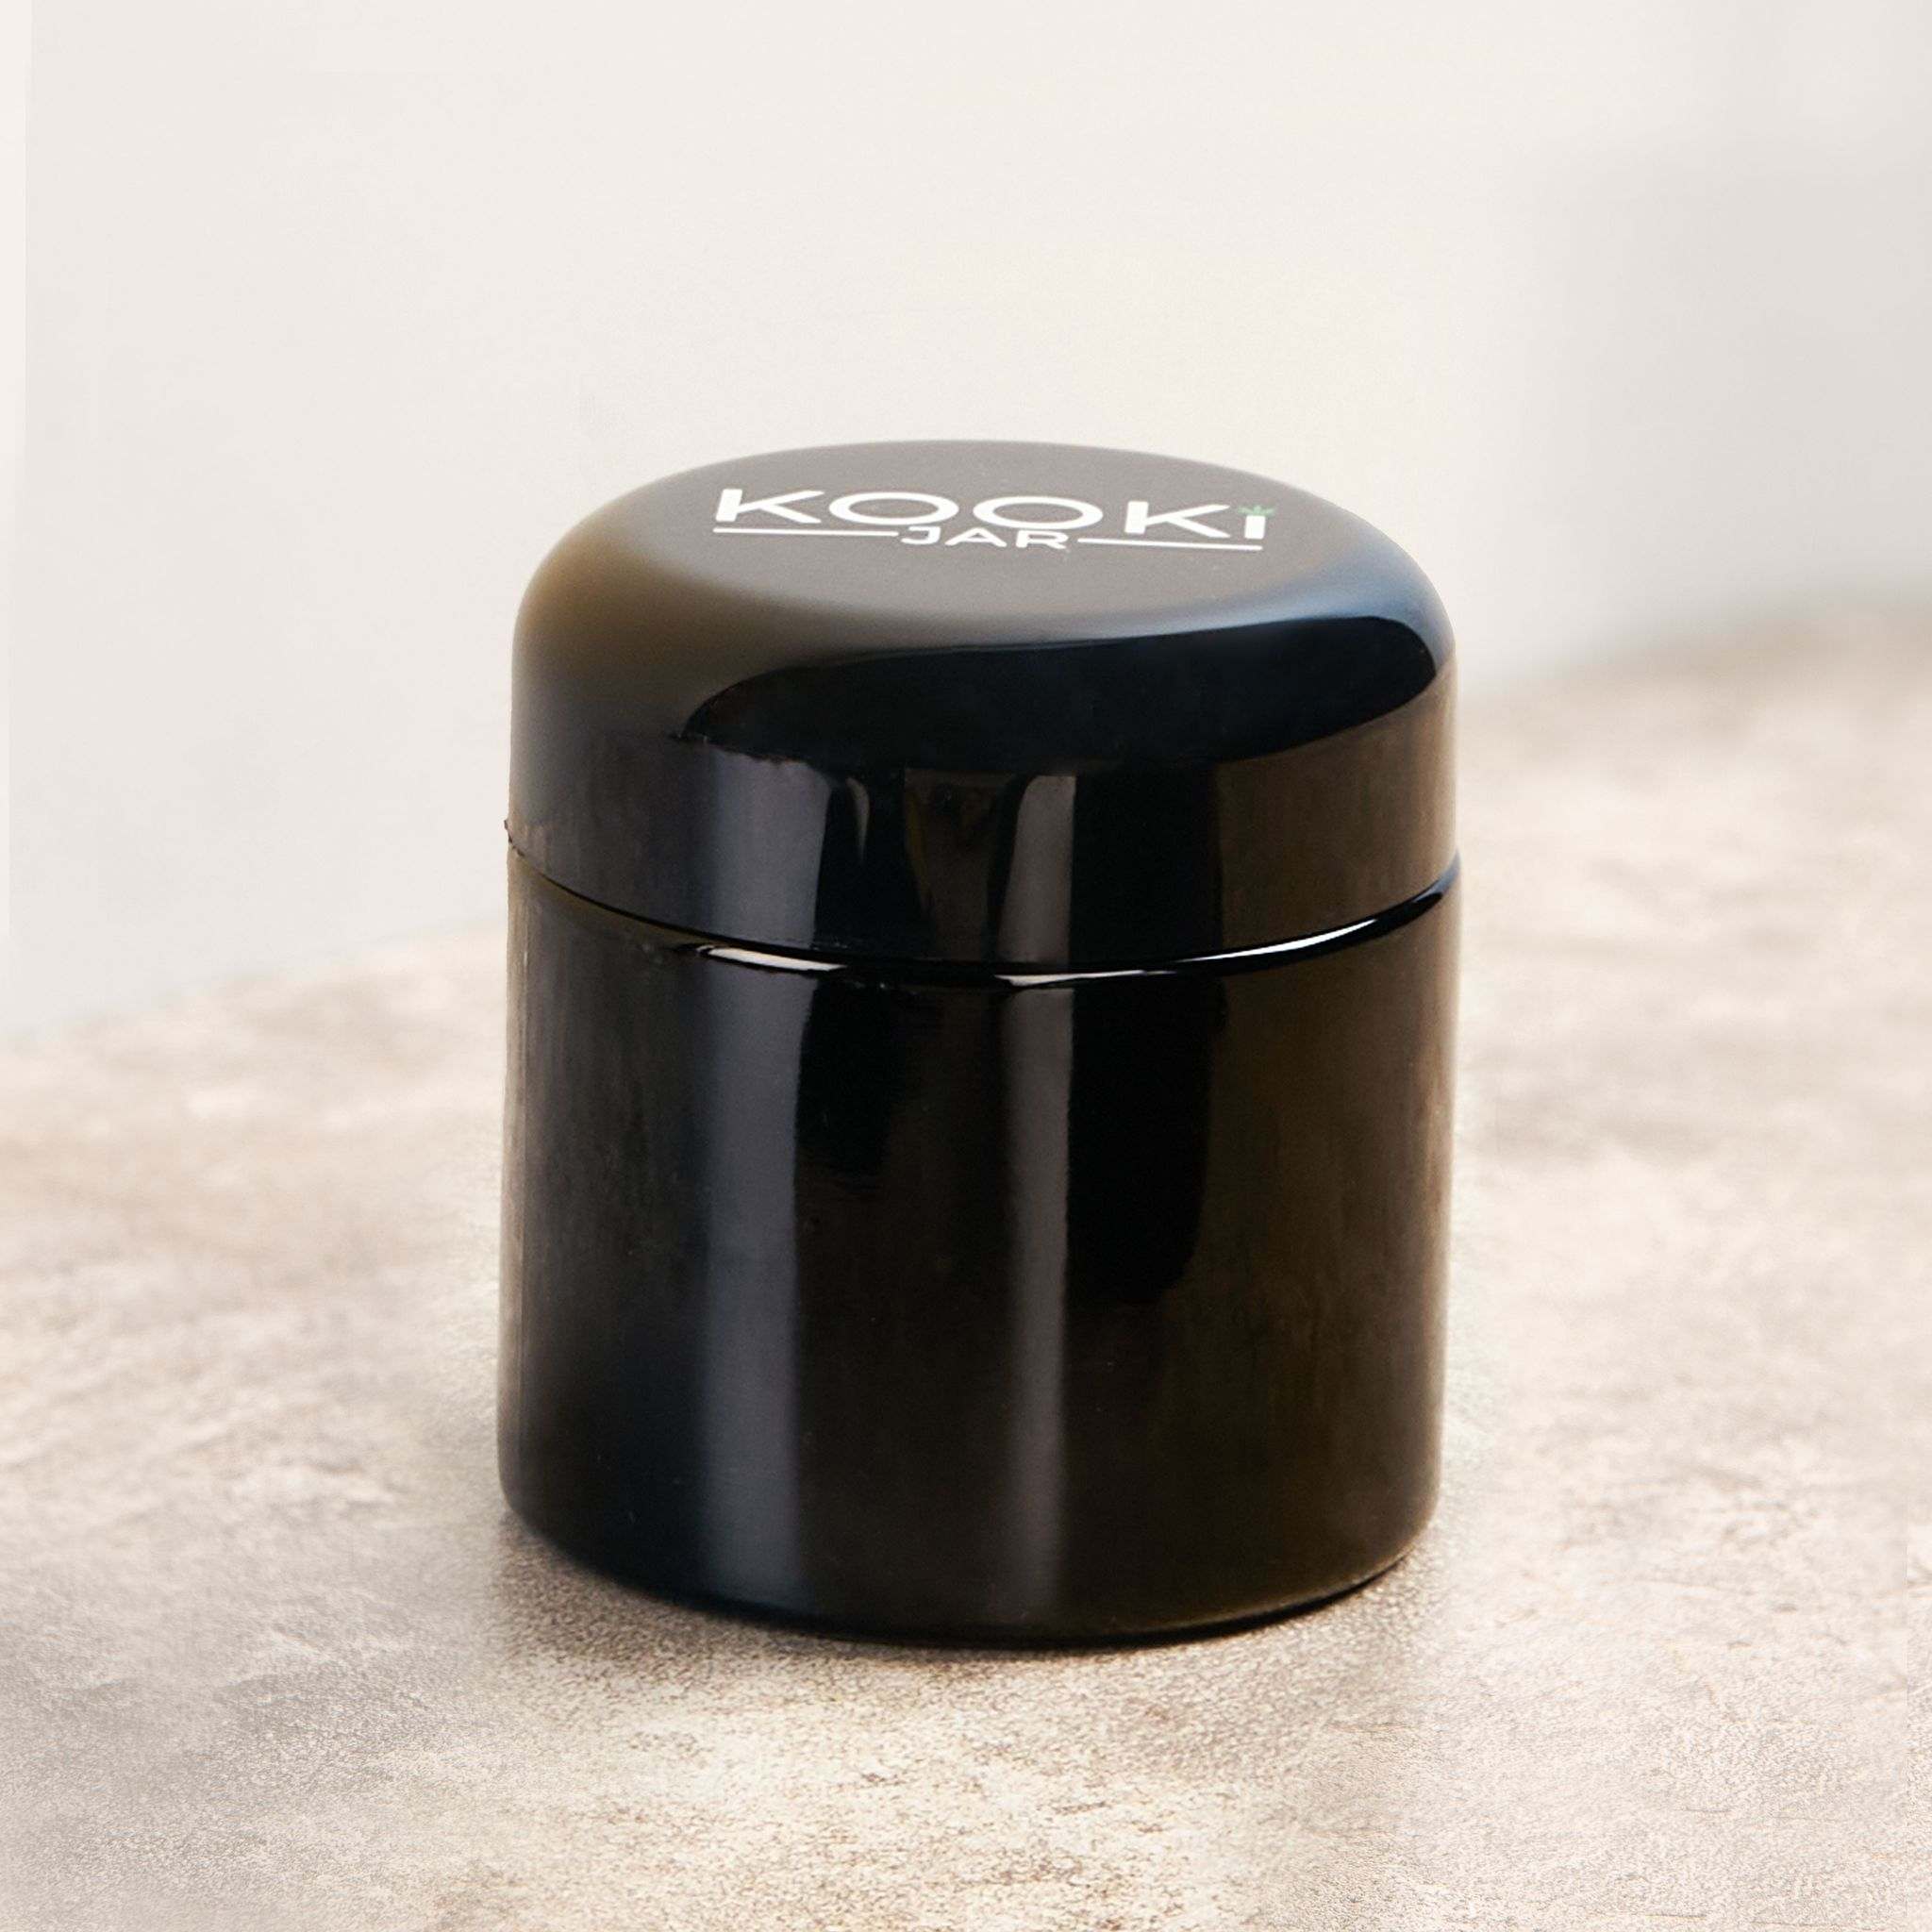 KookiJar Blackout | 1/4 oz. UV Glass Jar